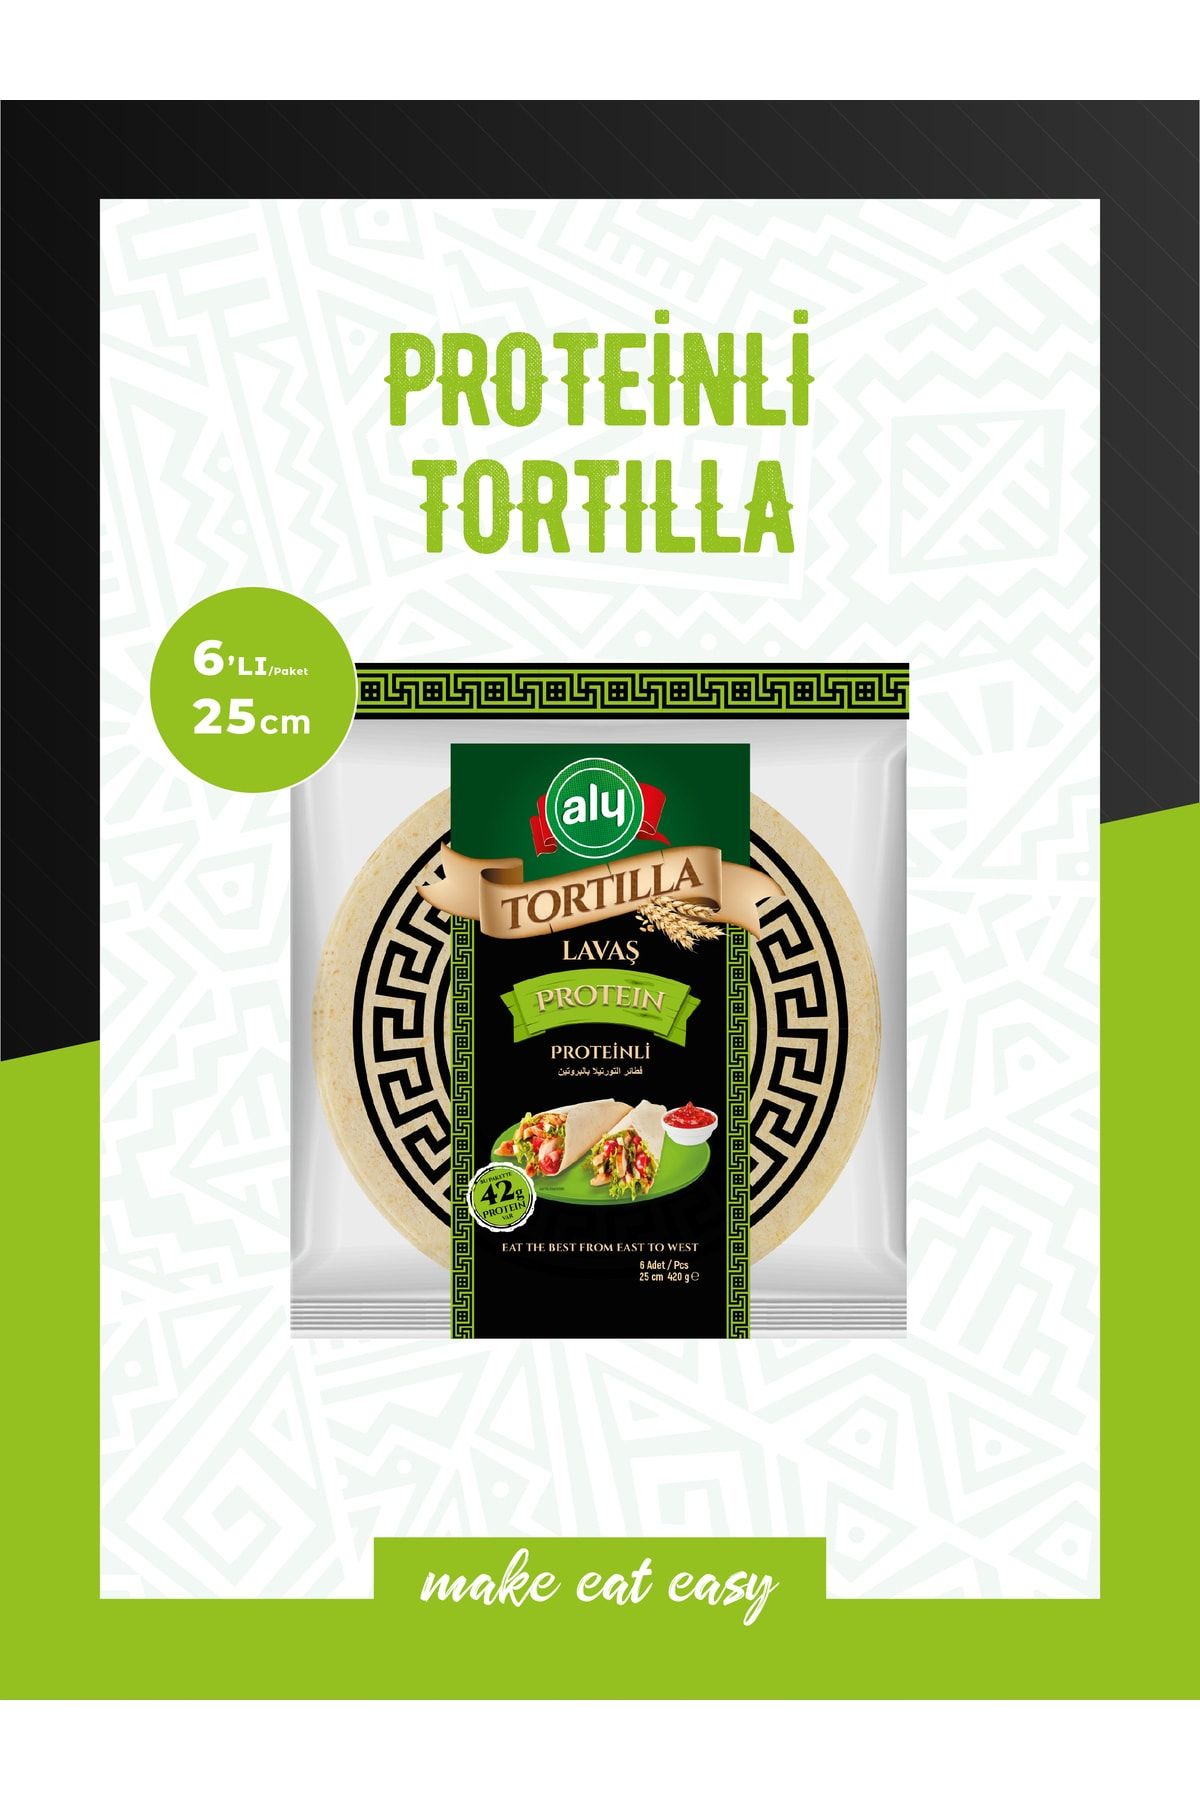 Aly Proteinli Tortilla Lavaş 25 cm 6'lı Paket 420 g